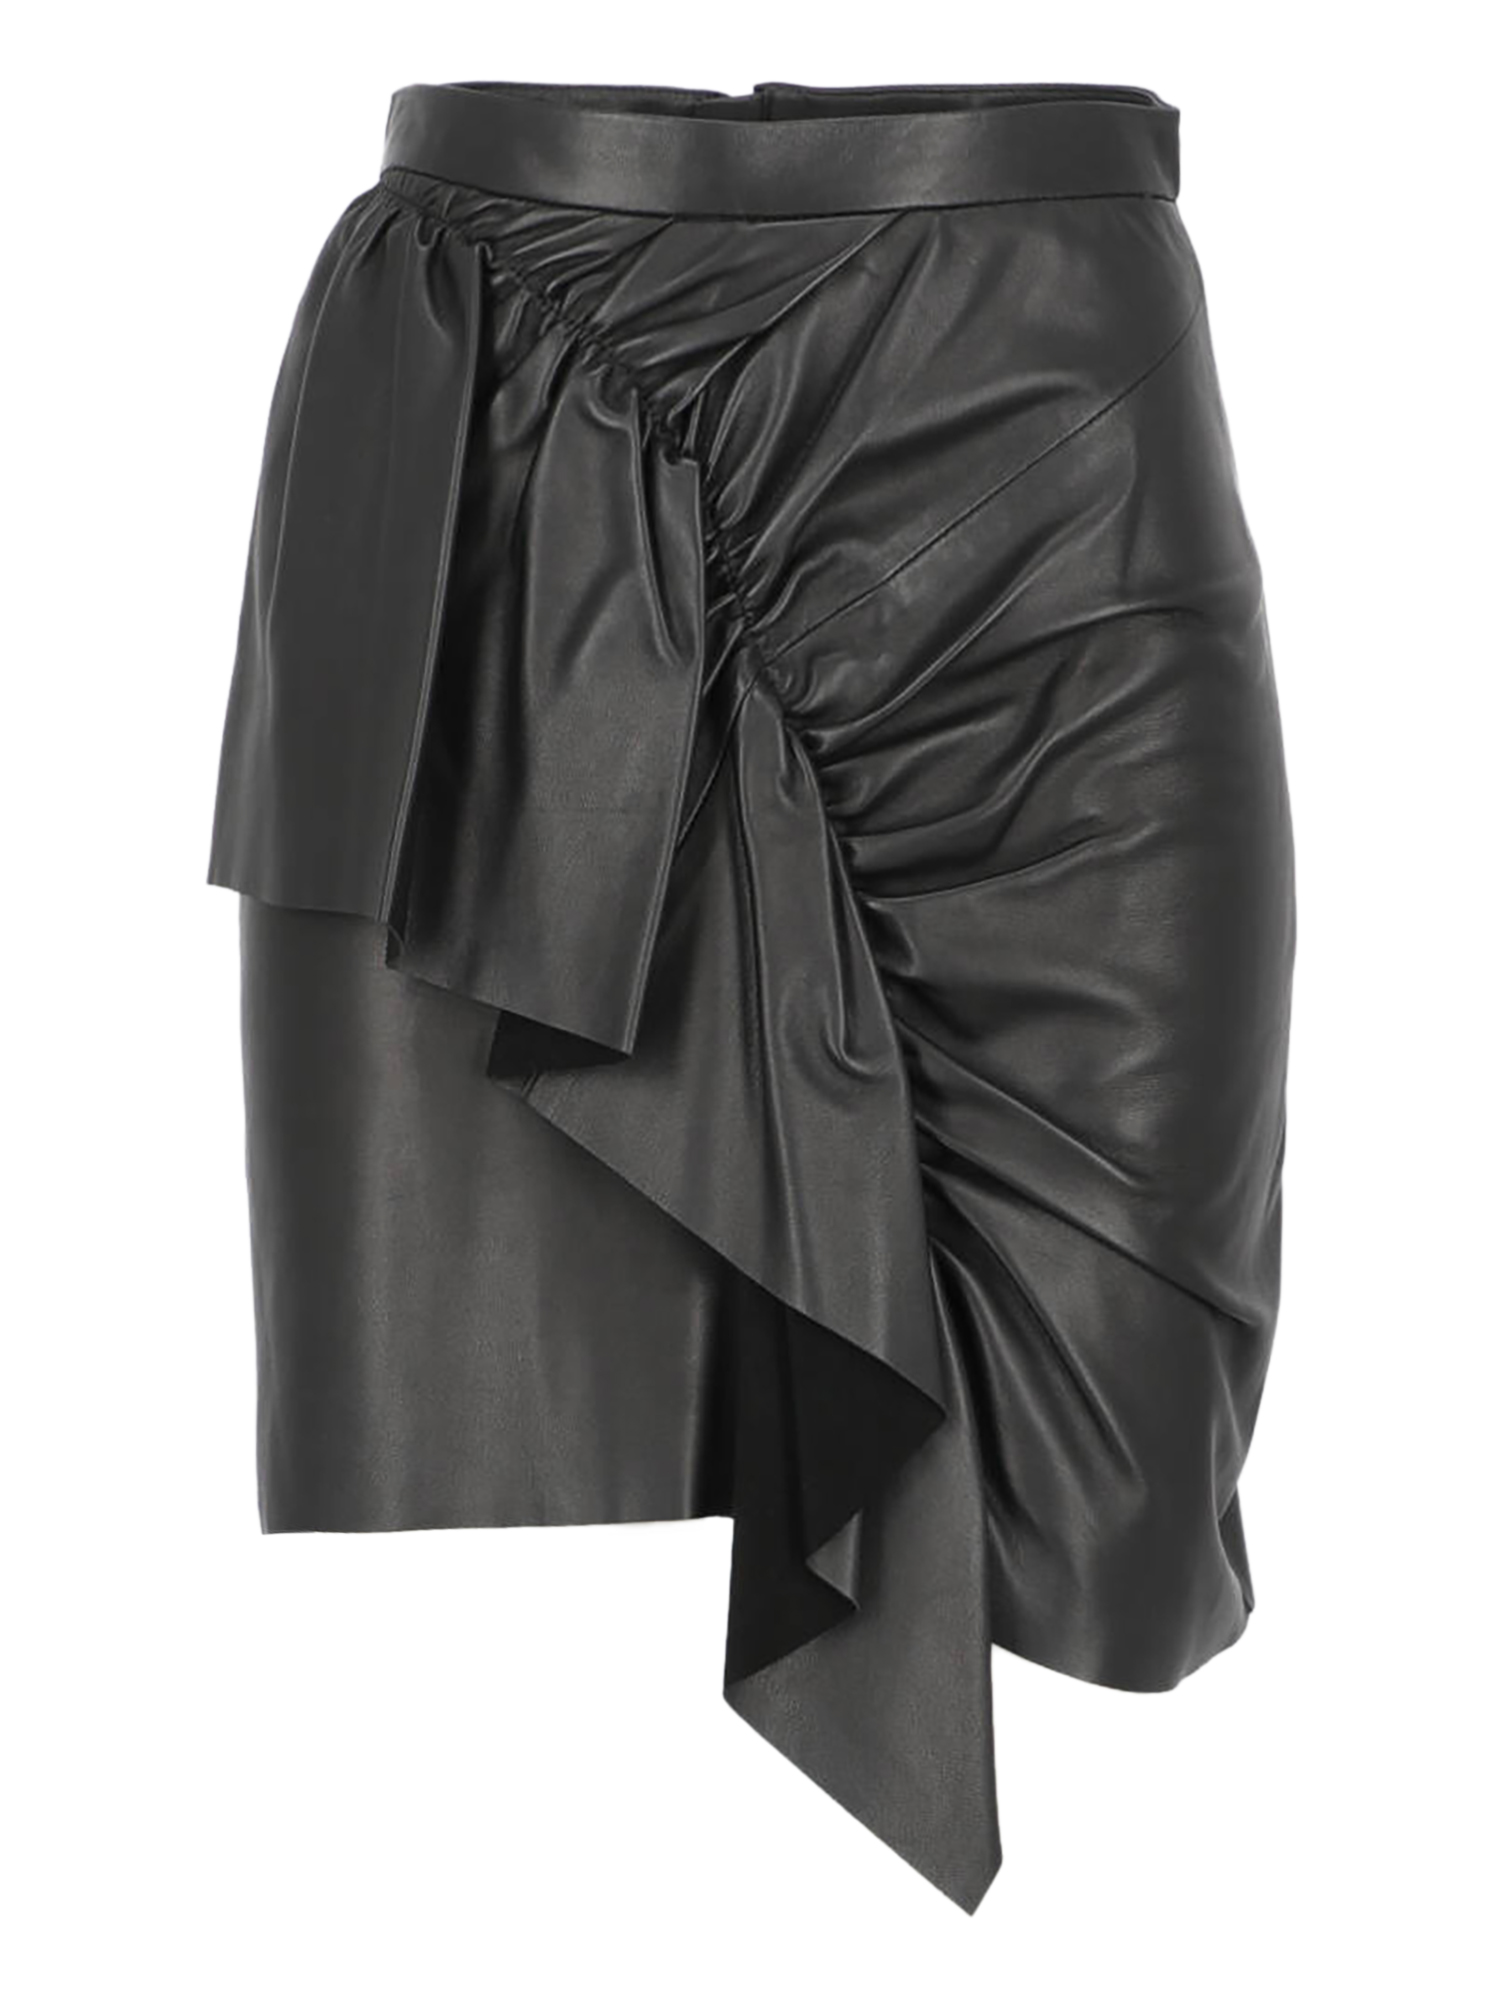 Jupes Pour Femme - Isabel Marant - En Leather Black - Taille:  -